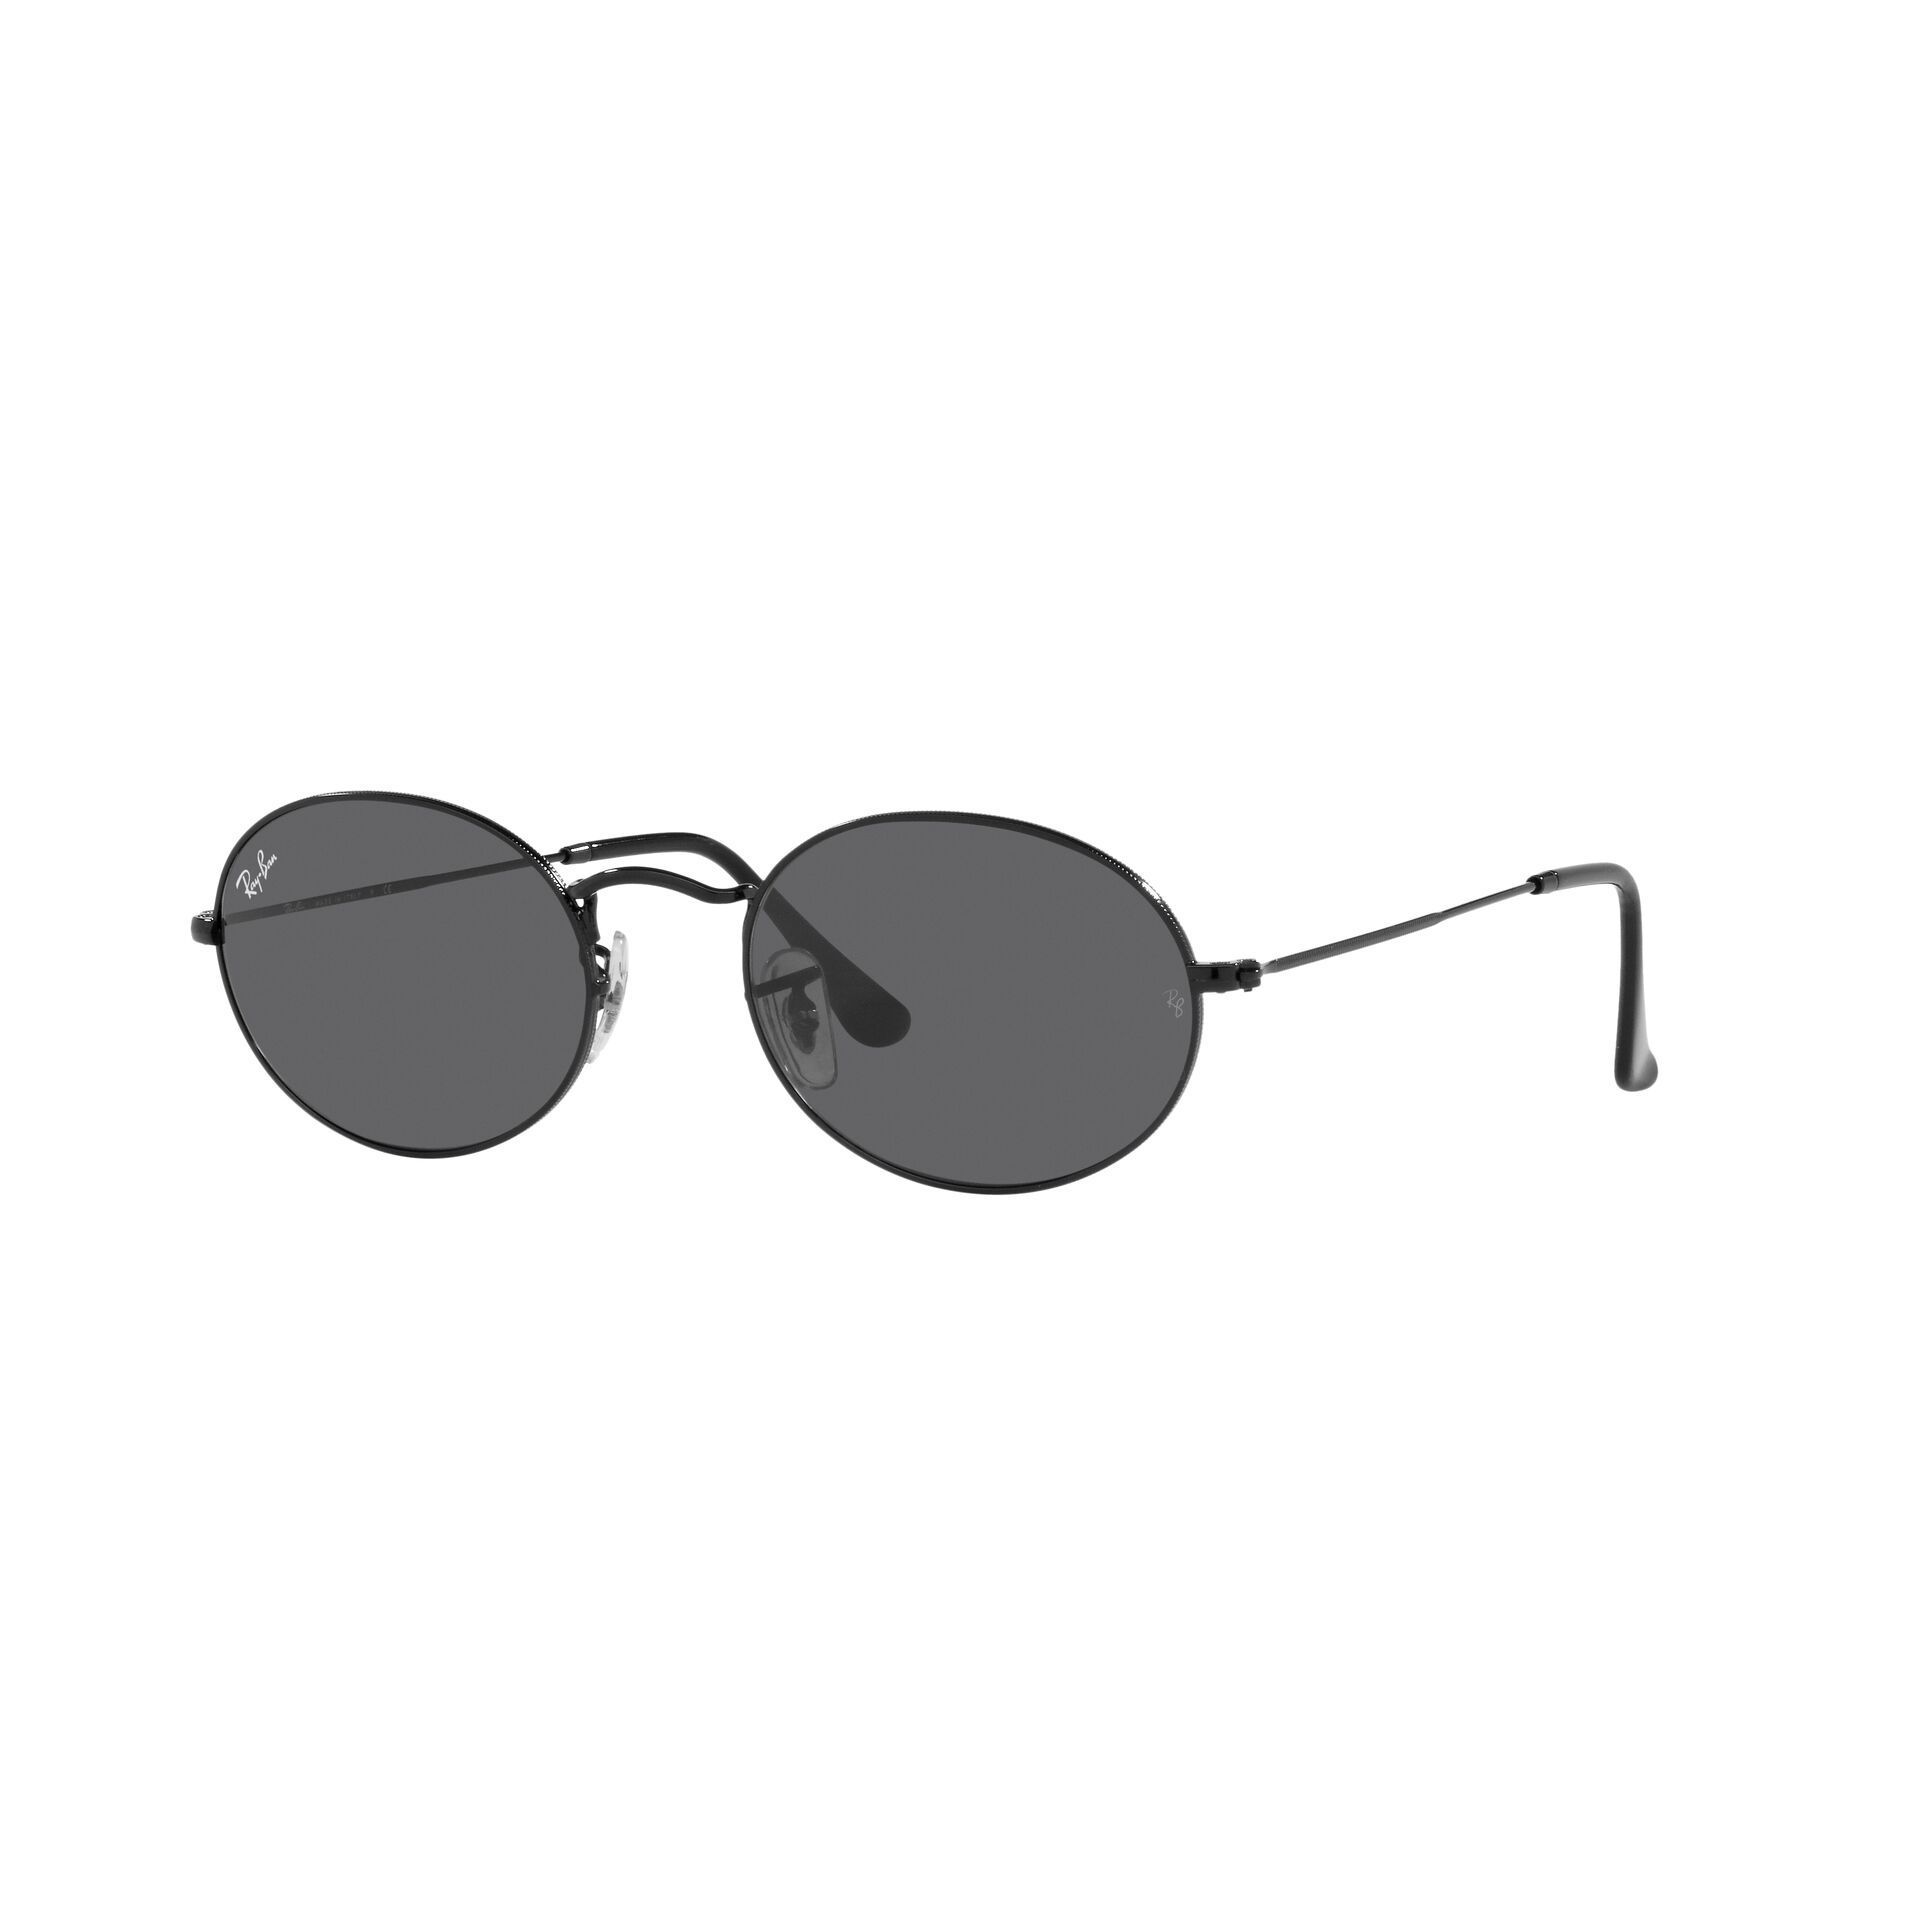 RB3547 Oval Sunglasses 002 B1 - size 51